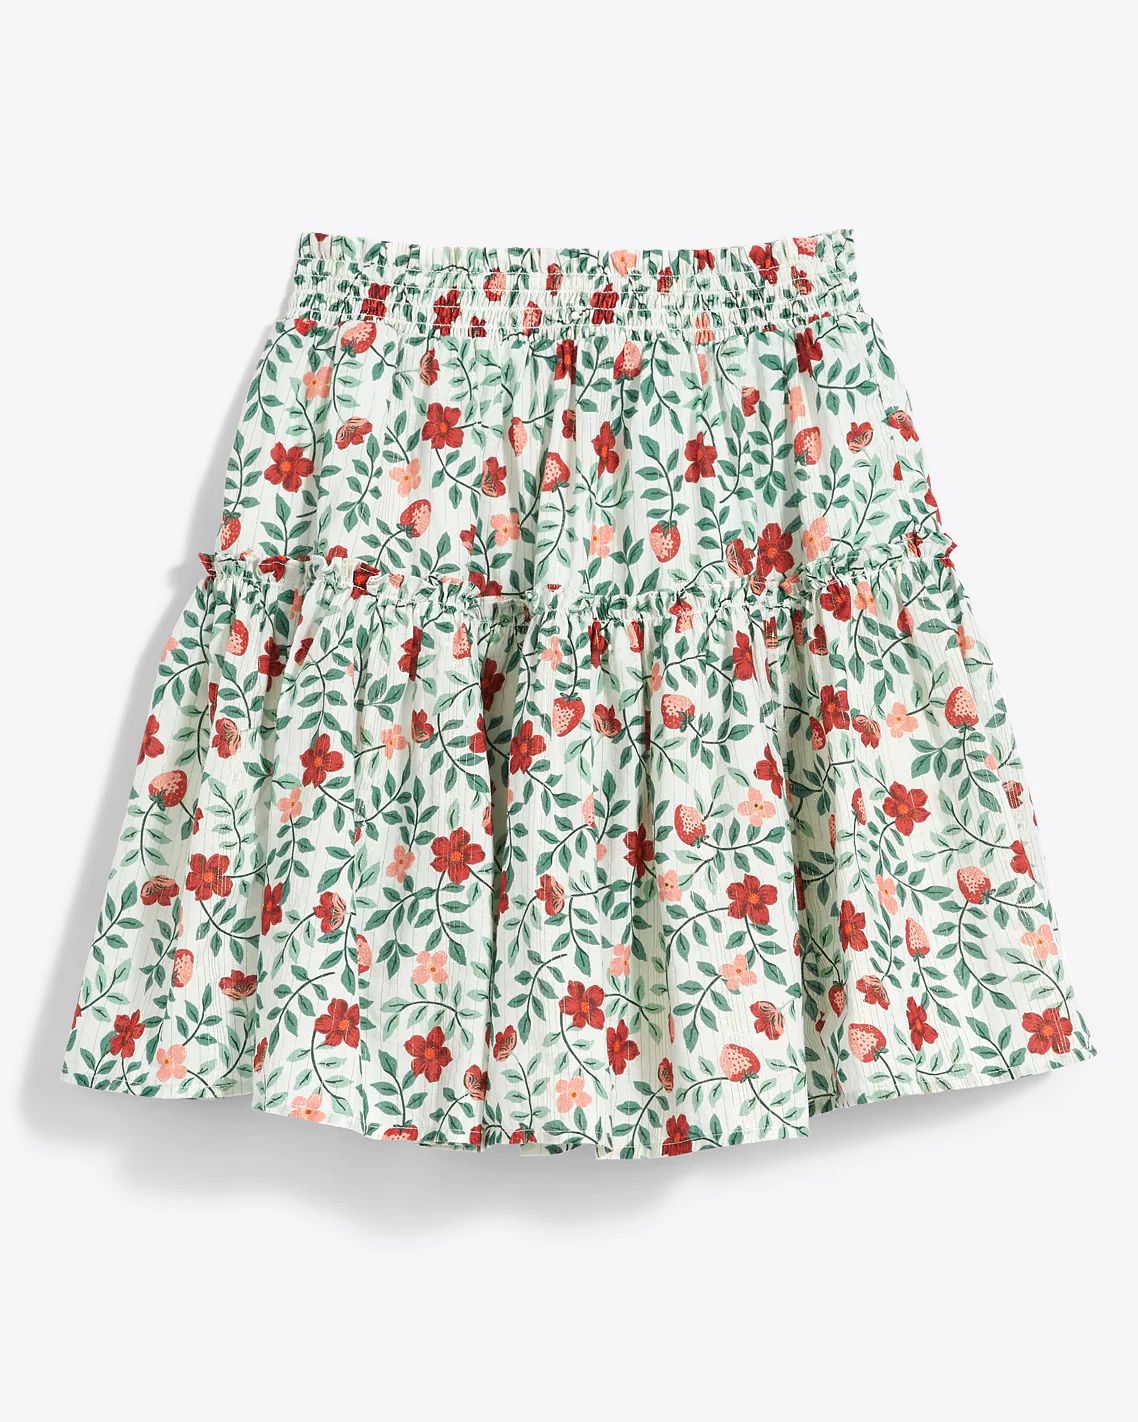 Pull on Mini Skirt in Strawberry Field | Draper James (US)